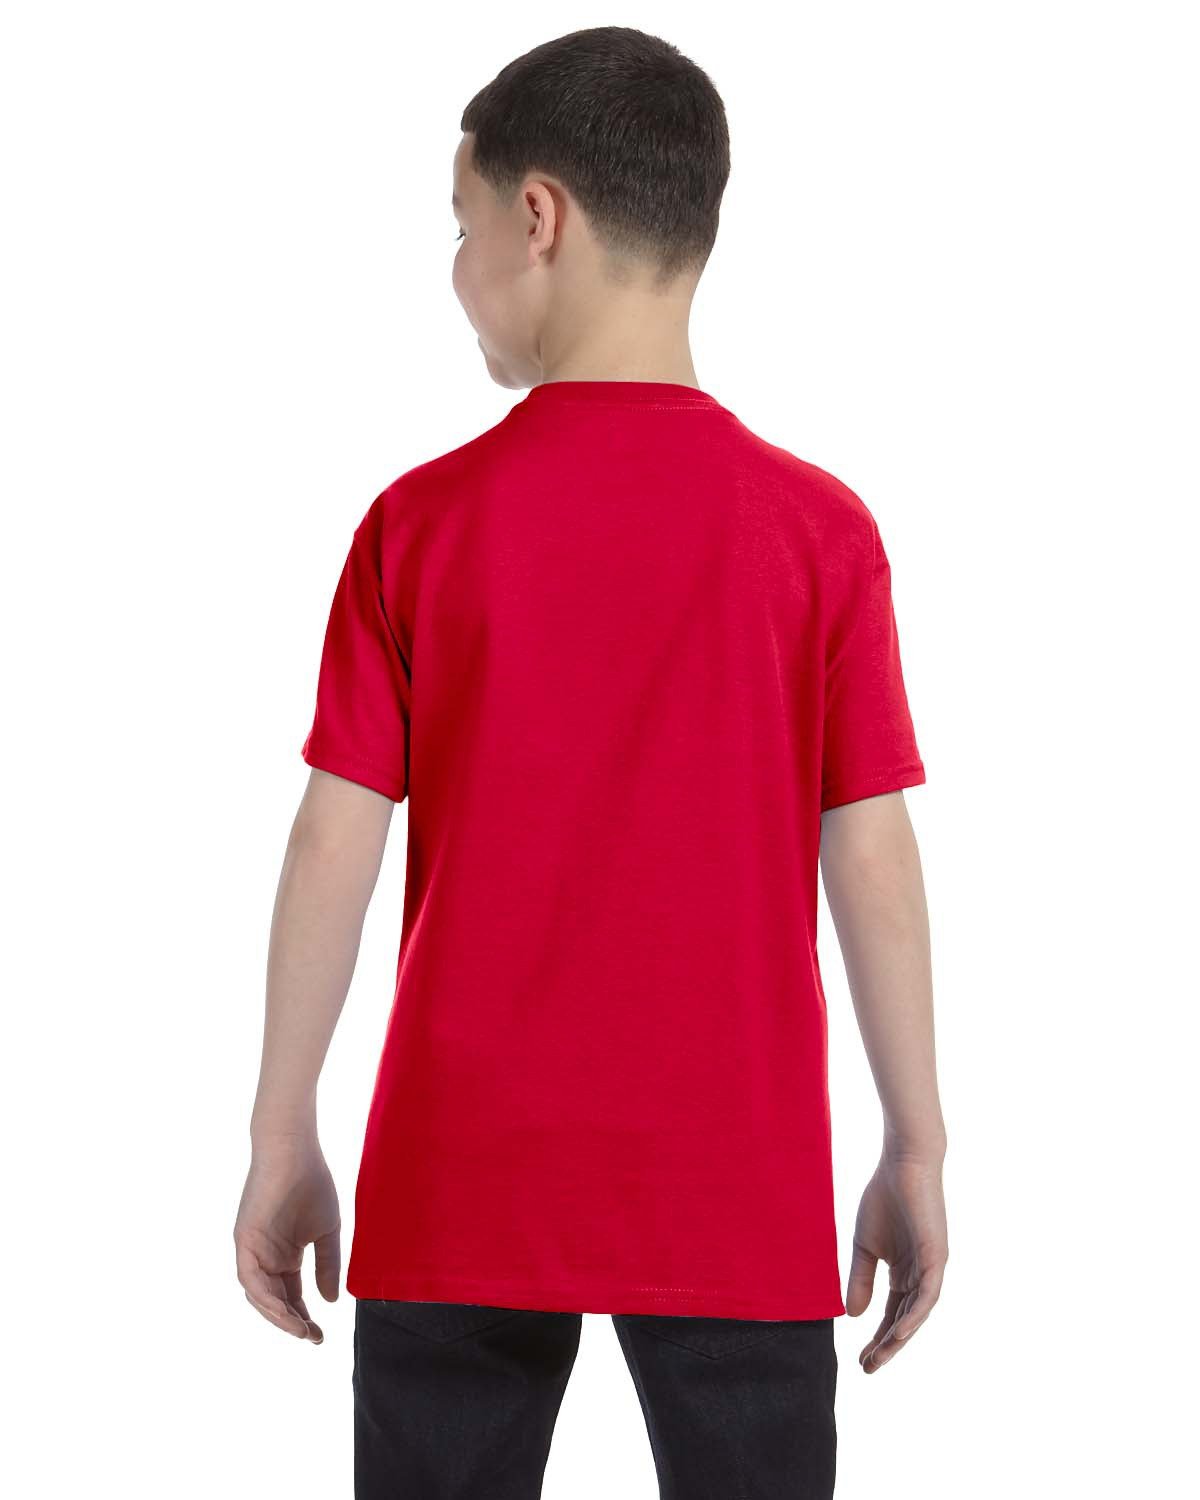 Gildan Short Sleeve Crew T-Shirt, 1 Each, Boy's, Size: Large, Black